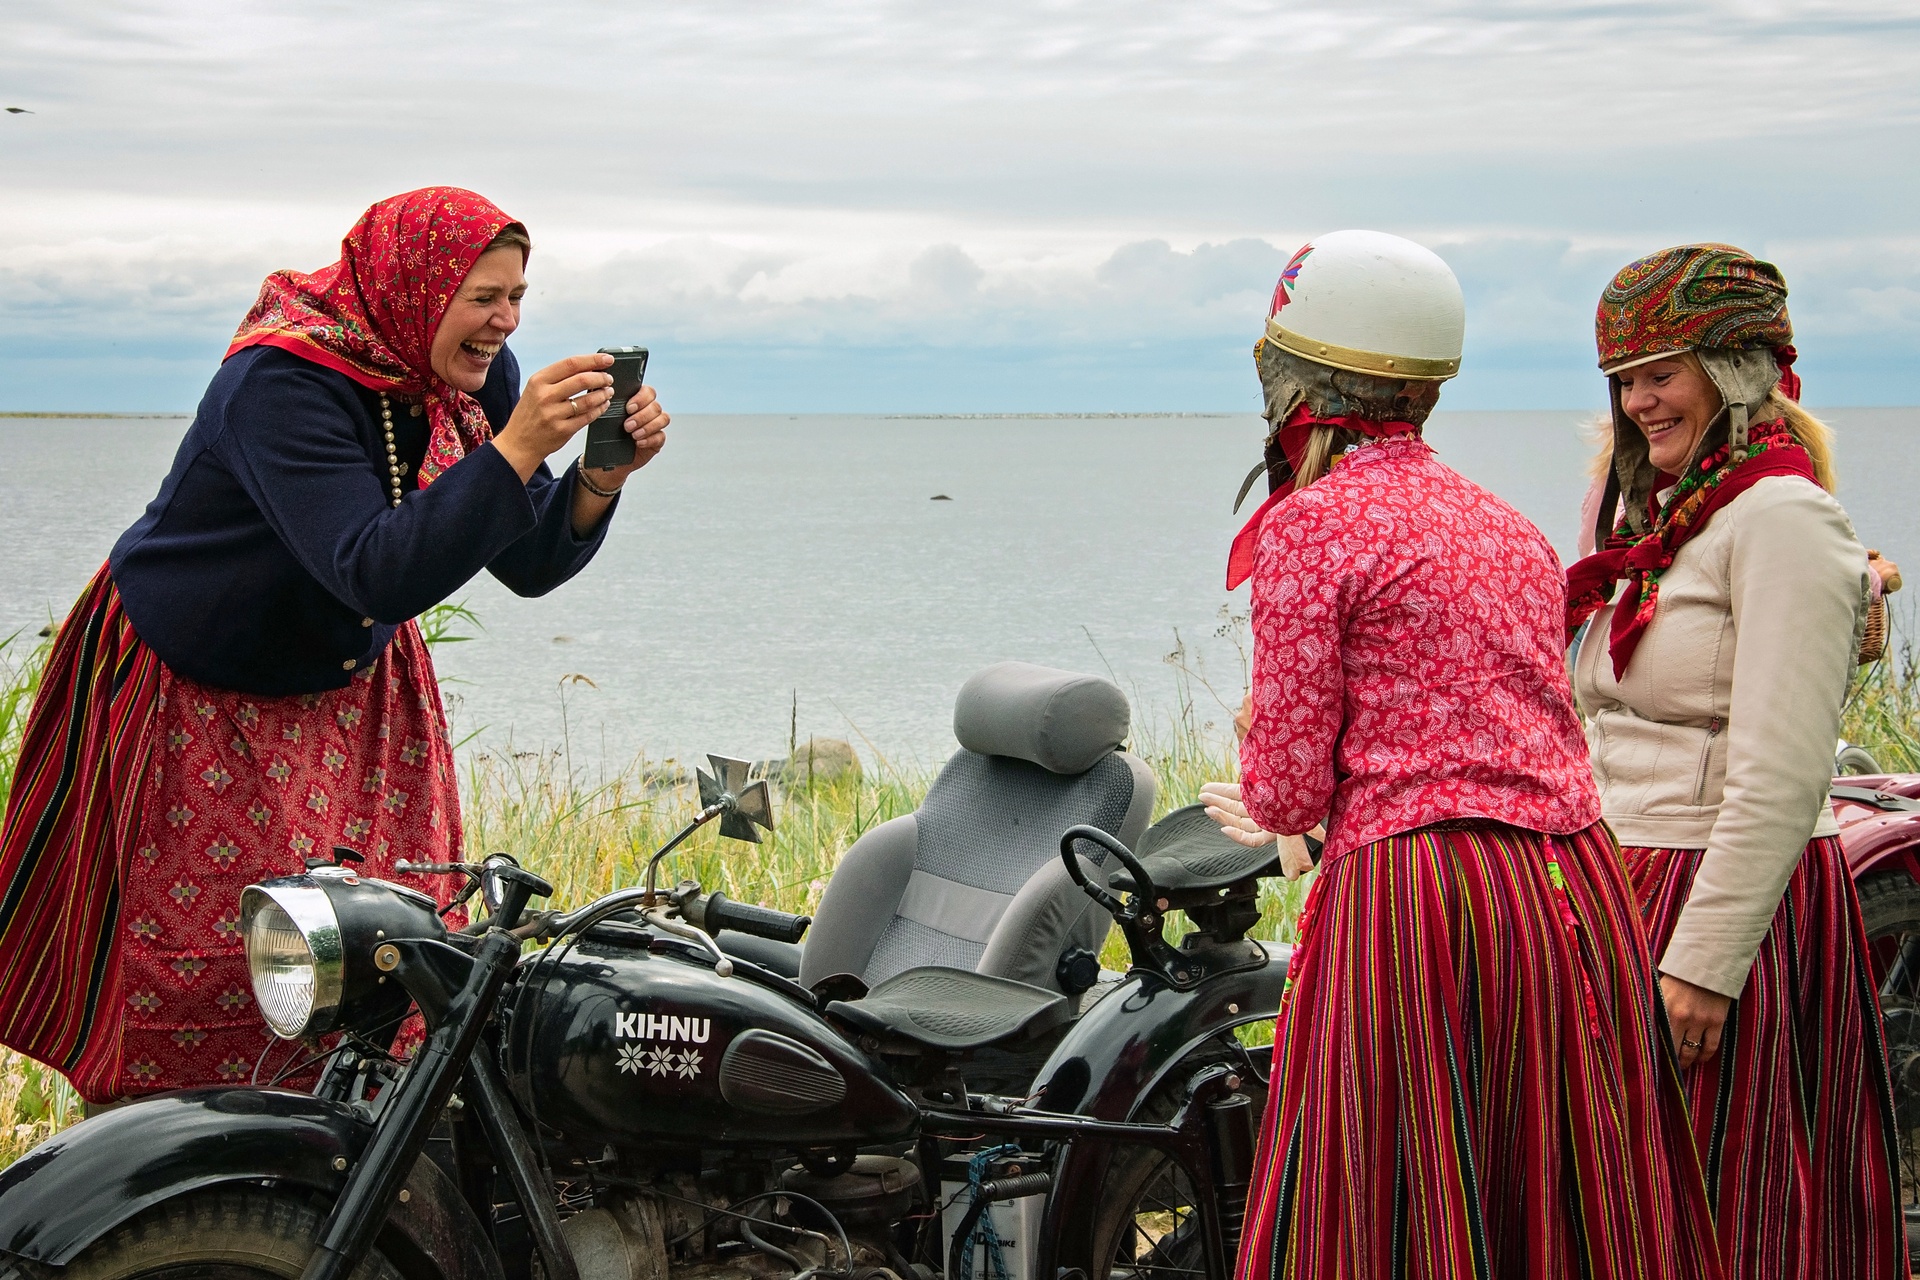 Kihnu women and motorcycle